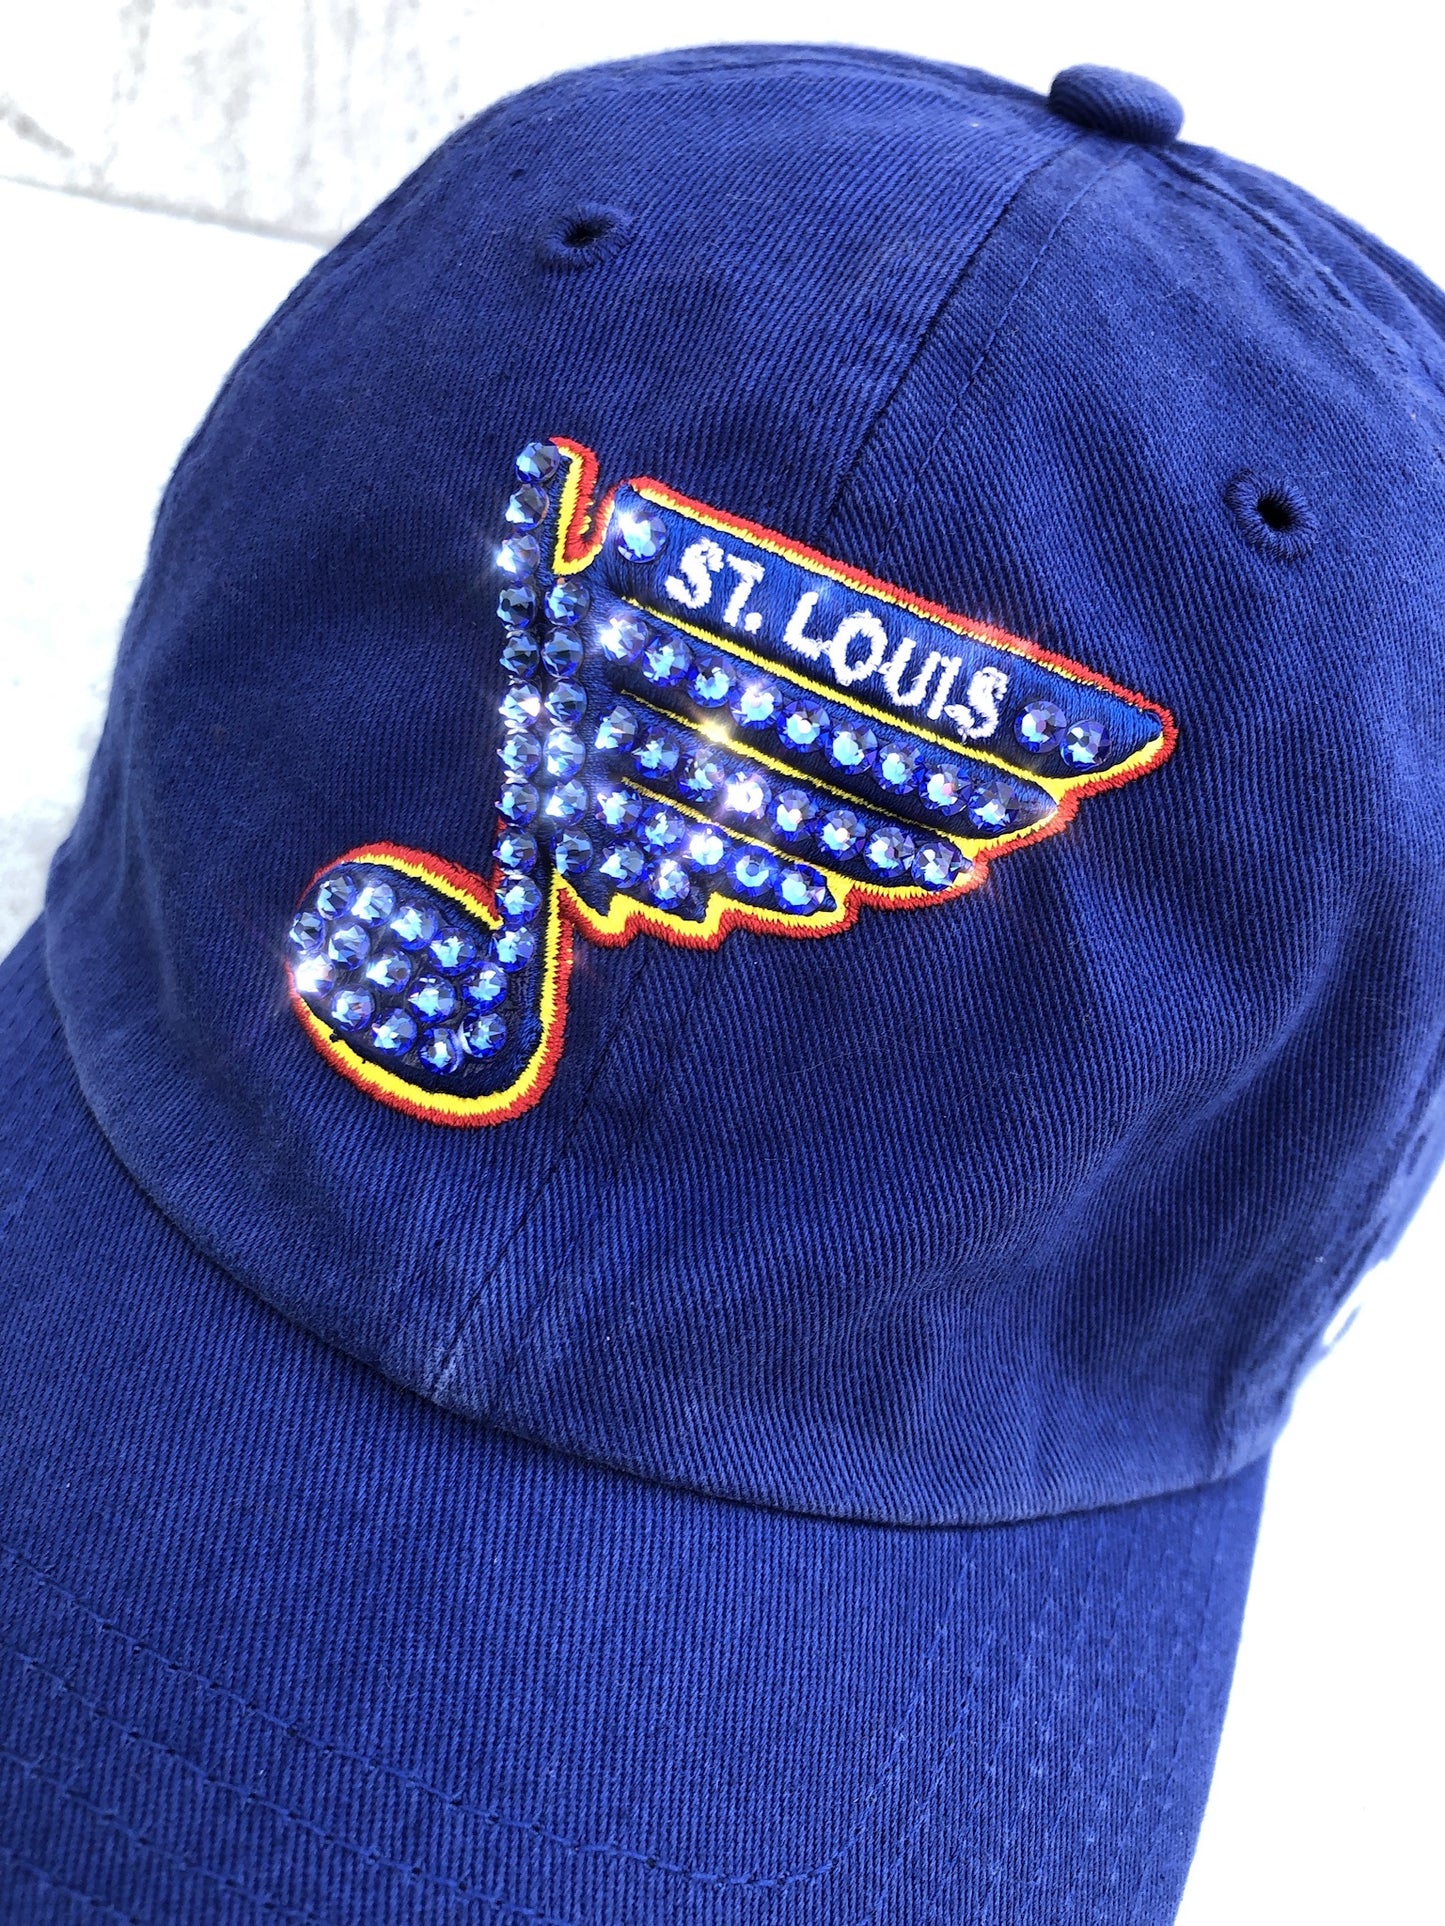 Bluenote '47 Blues Retro Hat - ROCKS